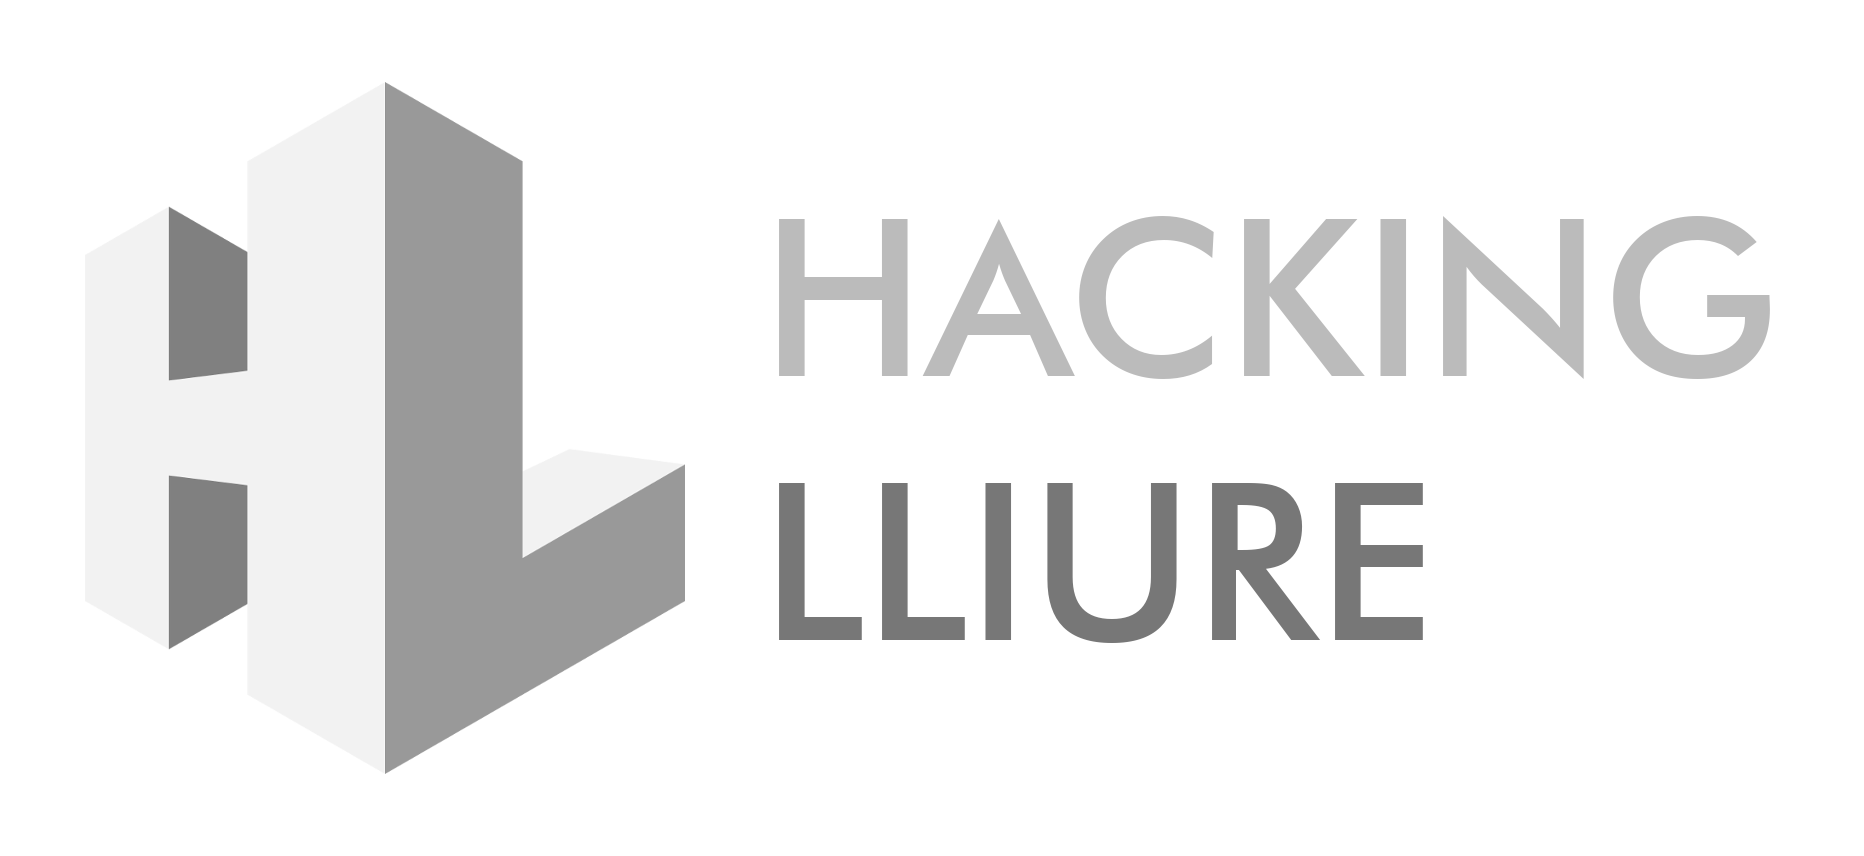 Hacking Lliure logo